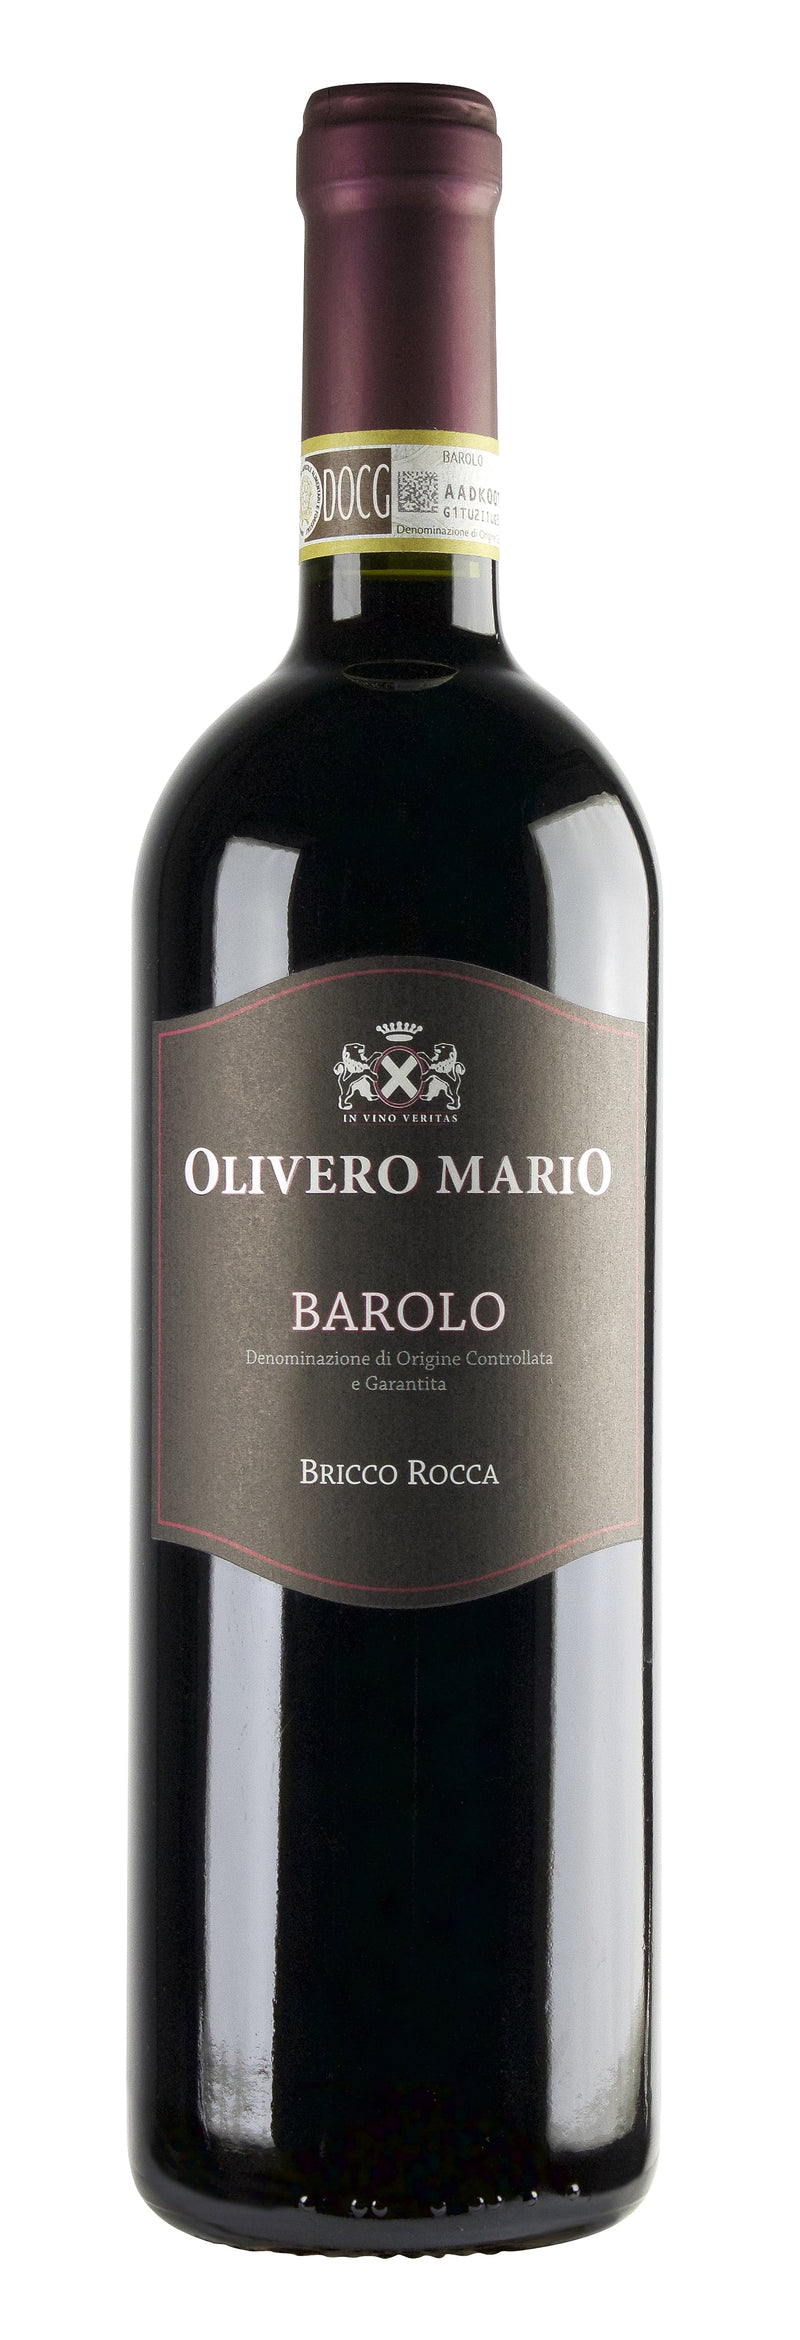 Barolo DOCG, Bricco Rocca, Olivero Mario rode wijn